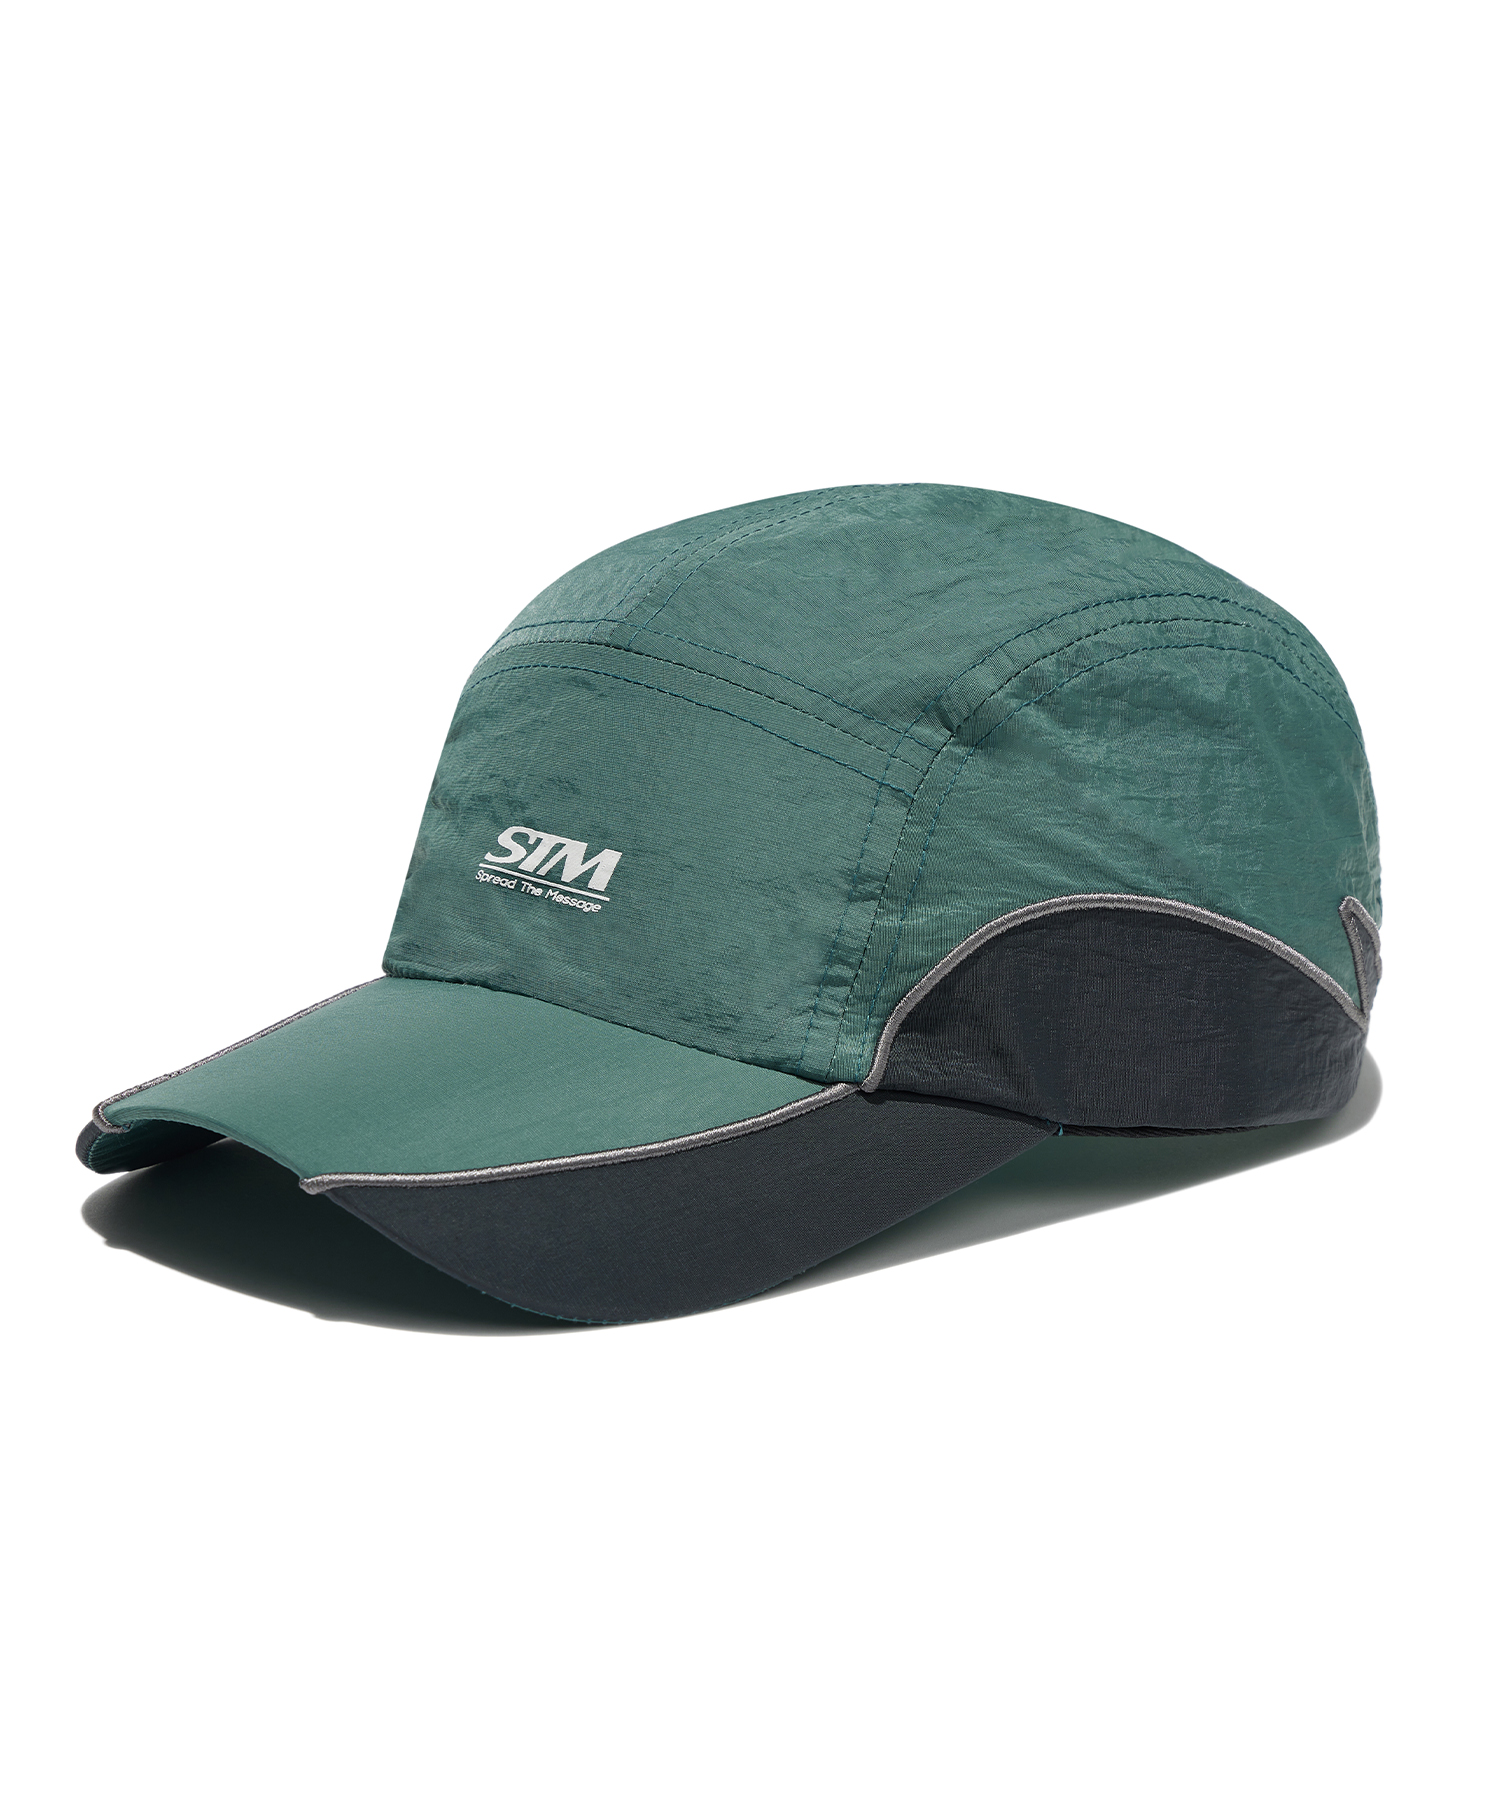 STM CAMP CAP - BLUE GREEN brownbreath